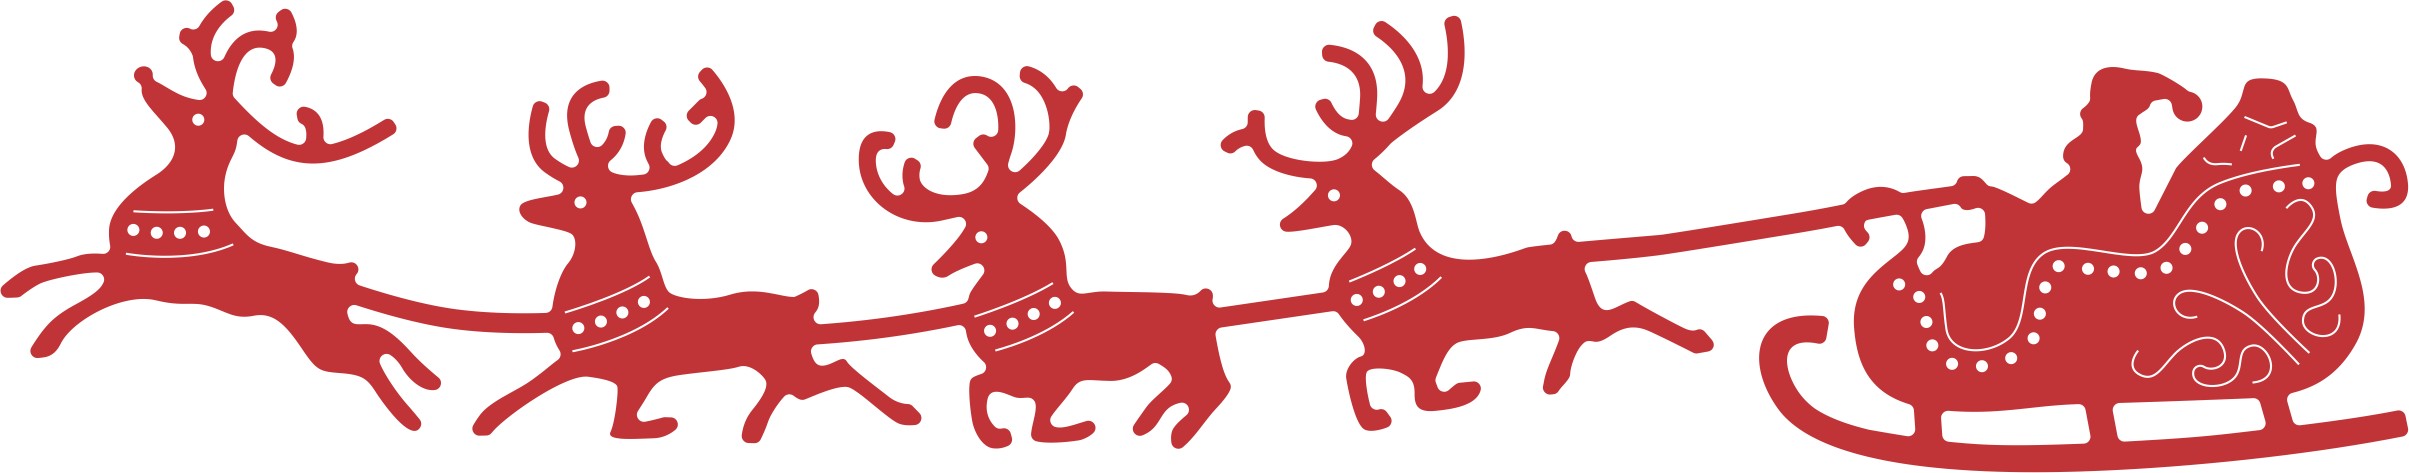 free clipart christmas sleigh - photo #44